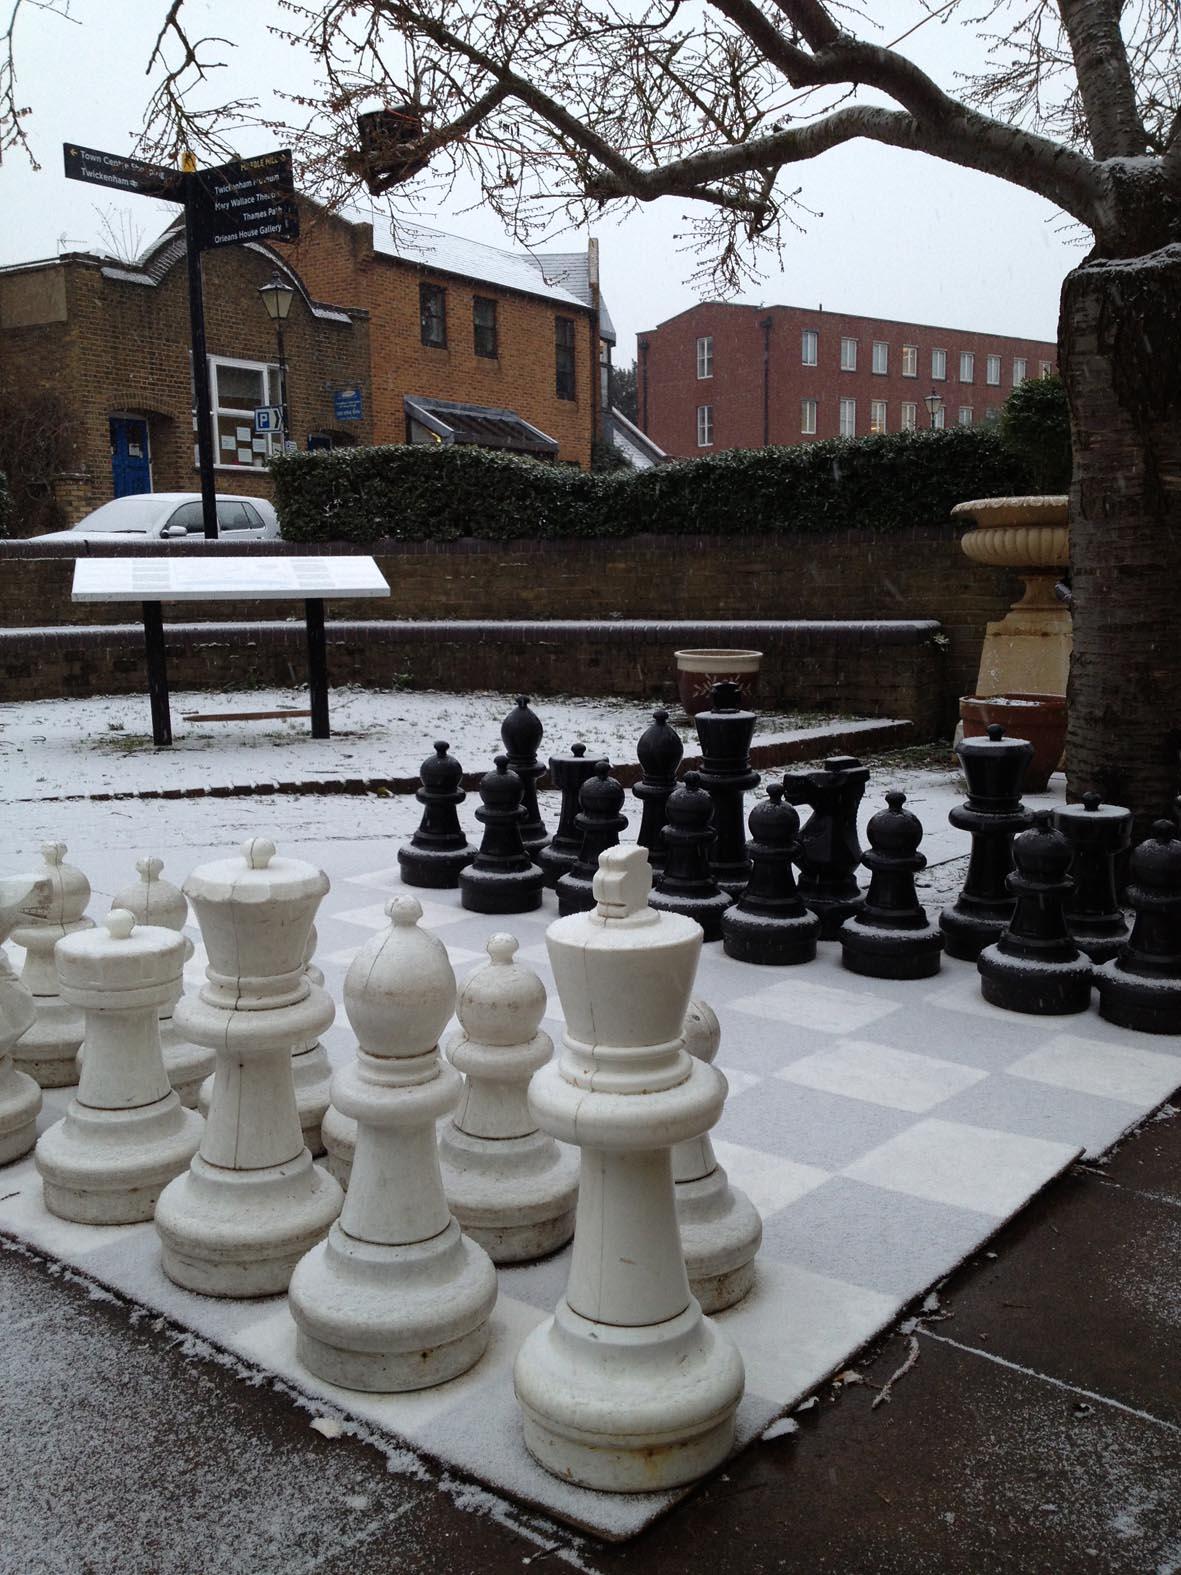 Snow on Twickenham riverside, 9am, Friday, Jan 18